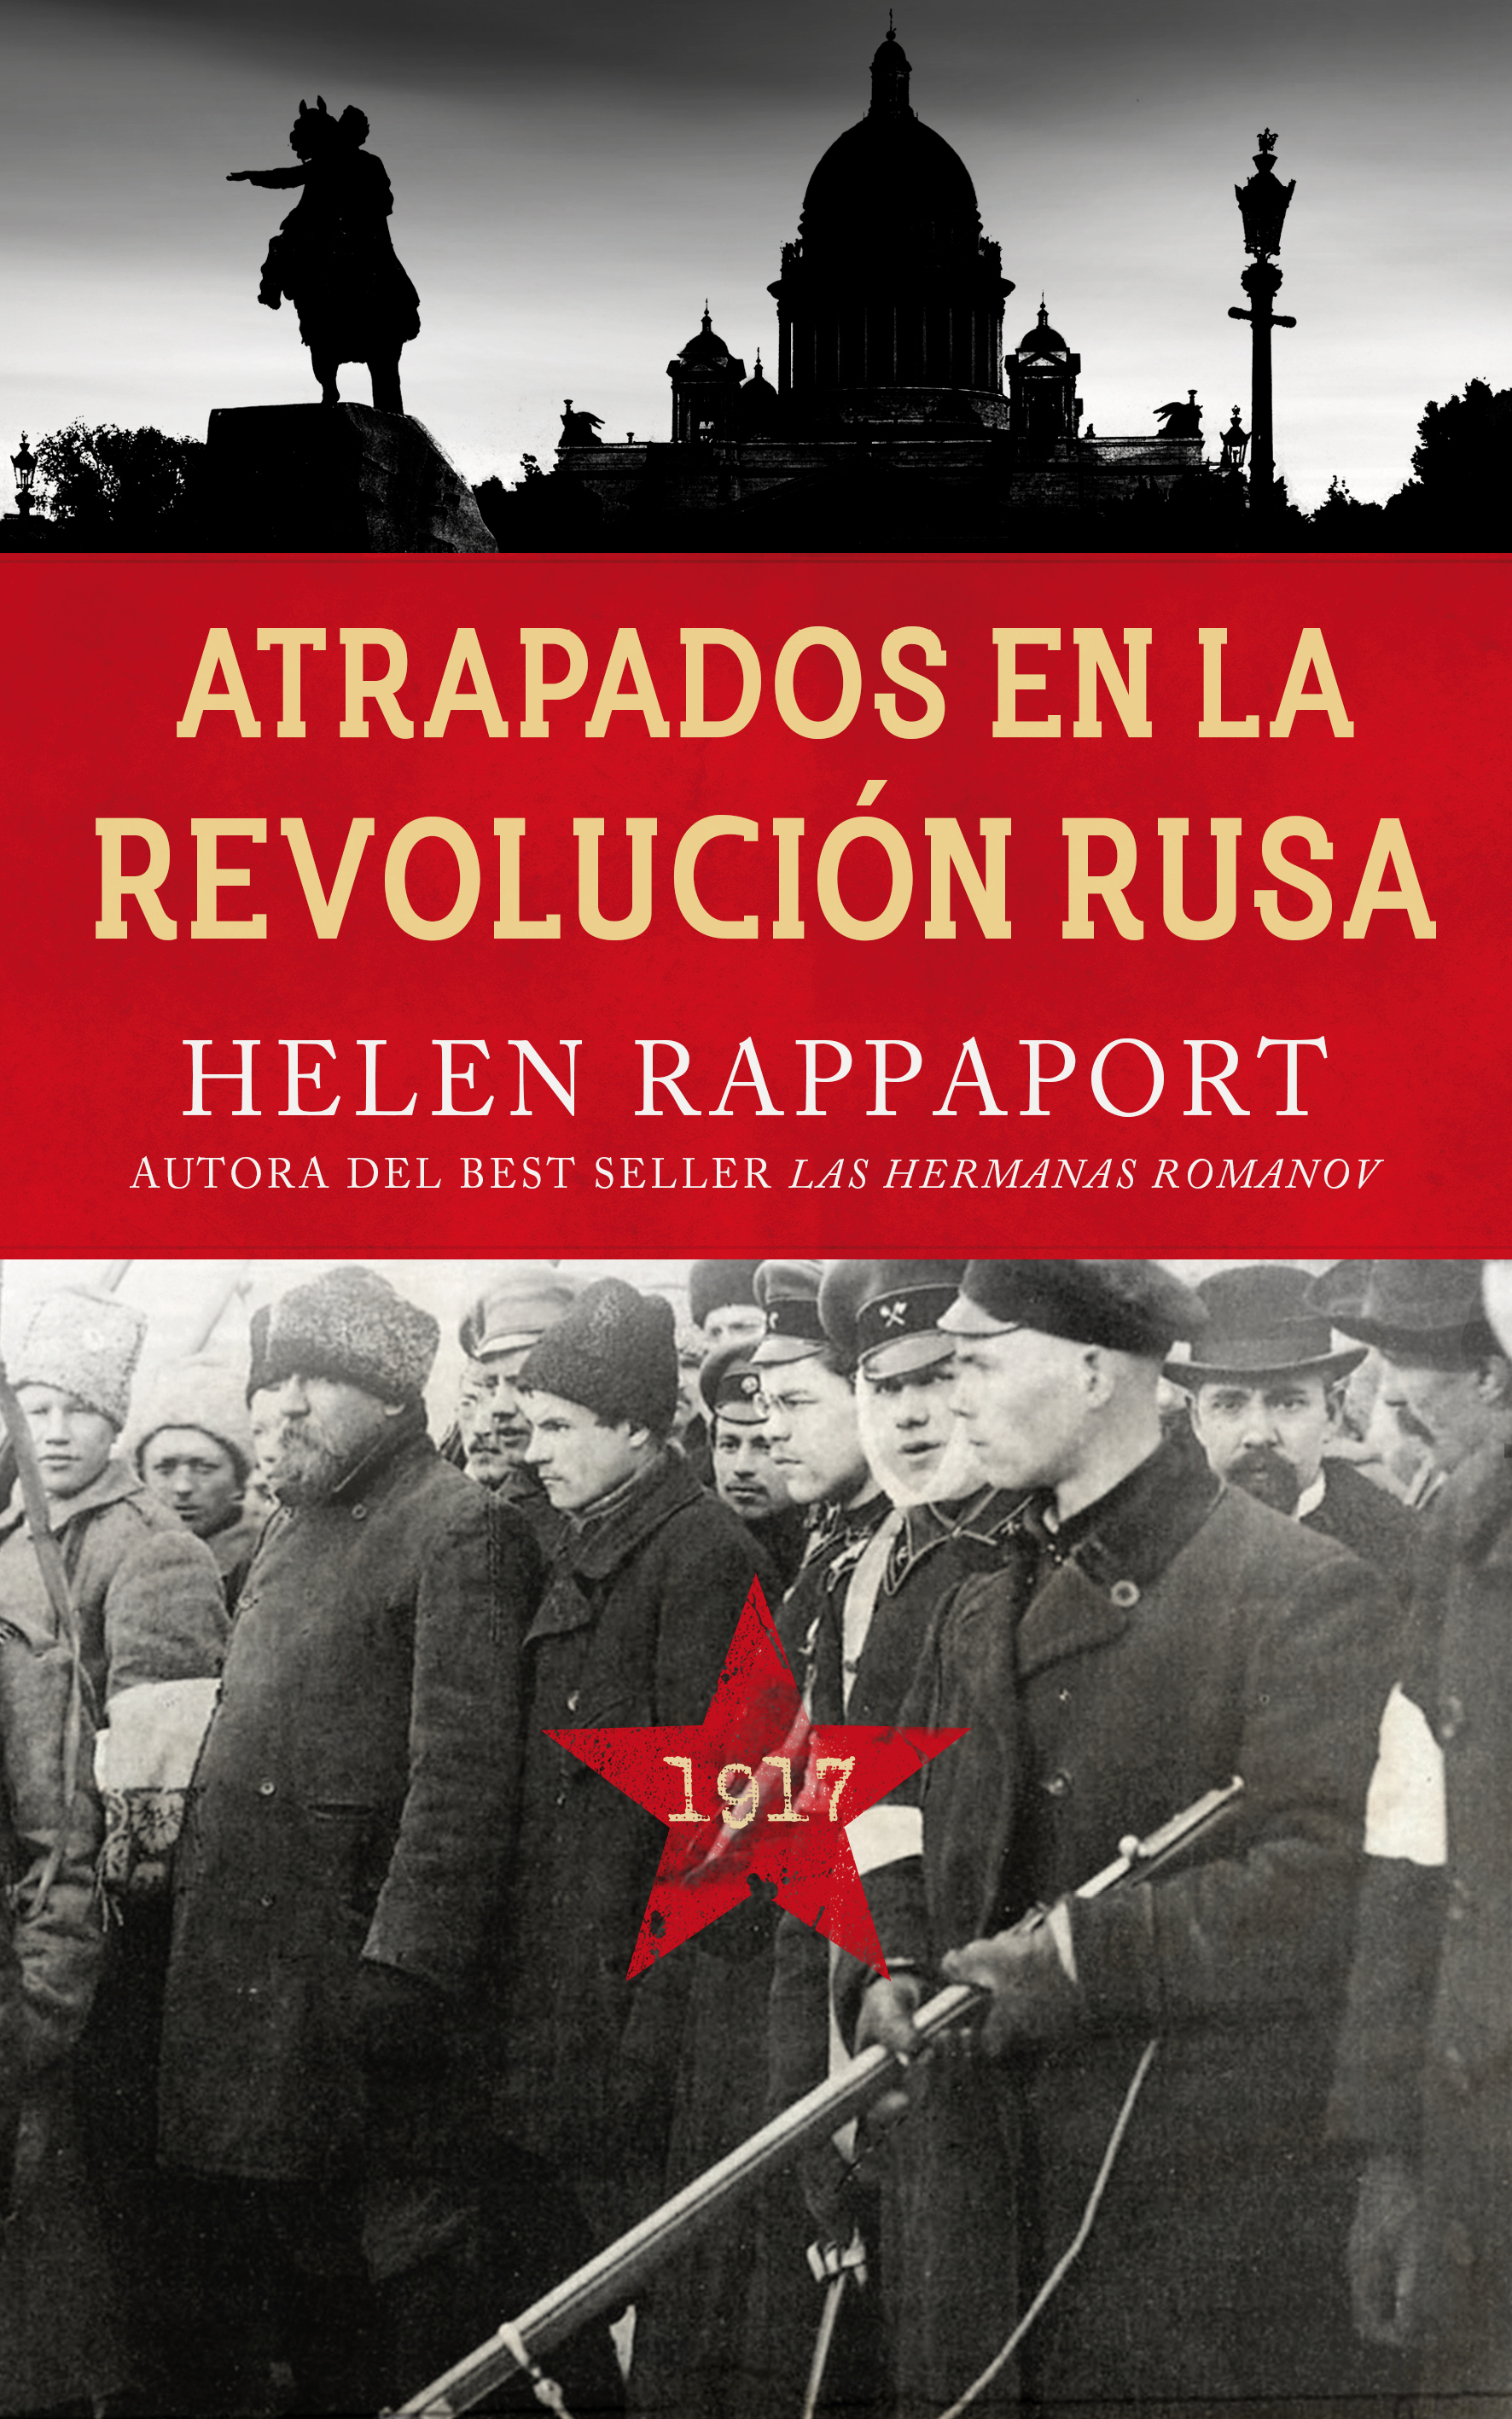 revolucion rusa documental en espanol